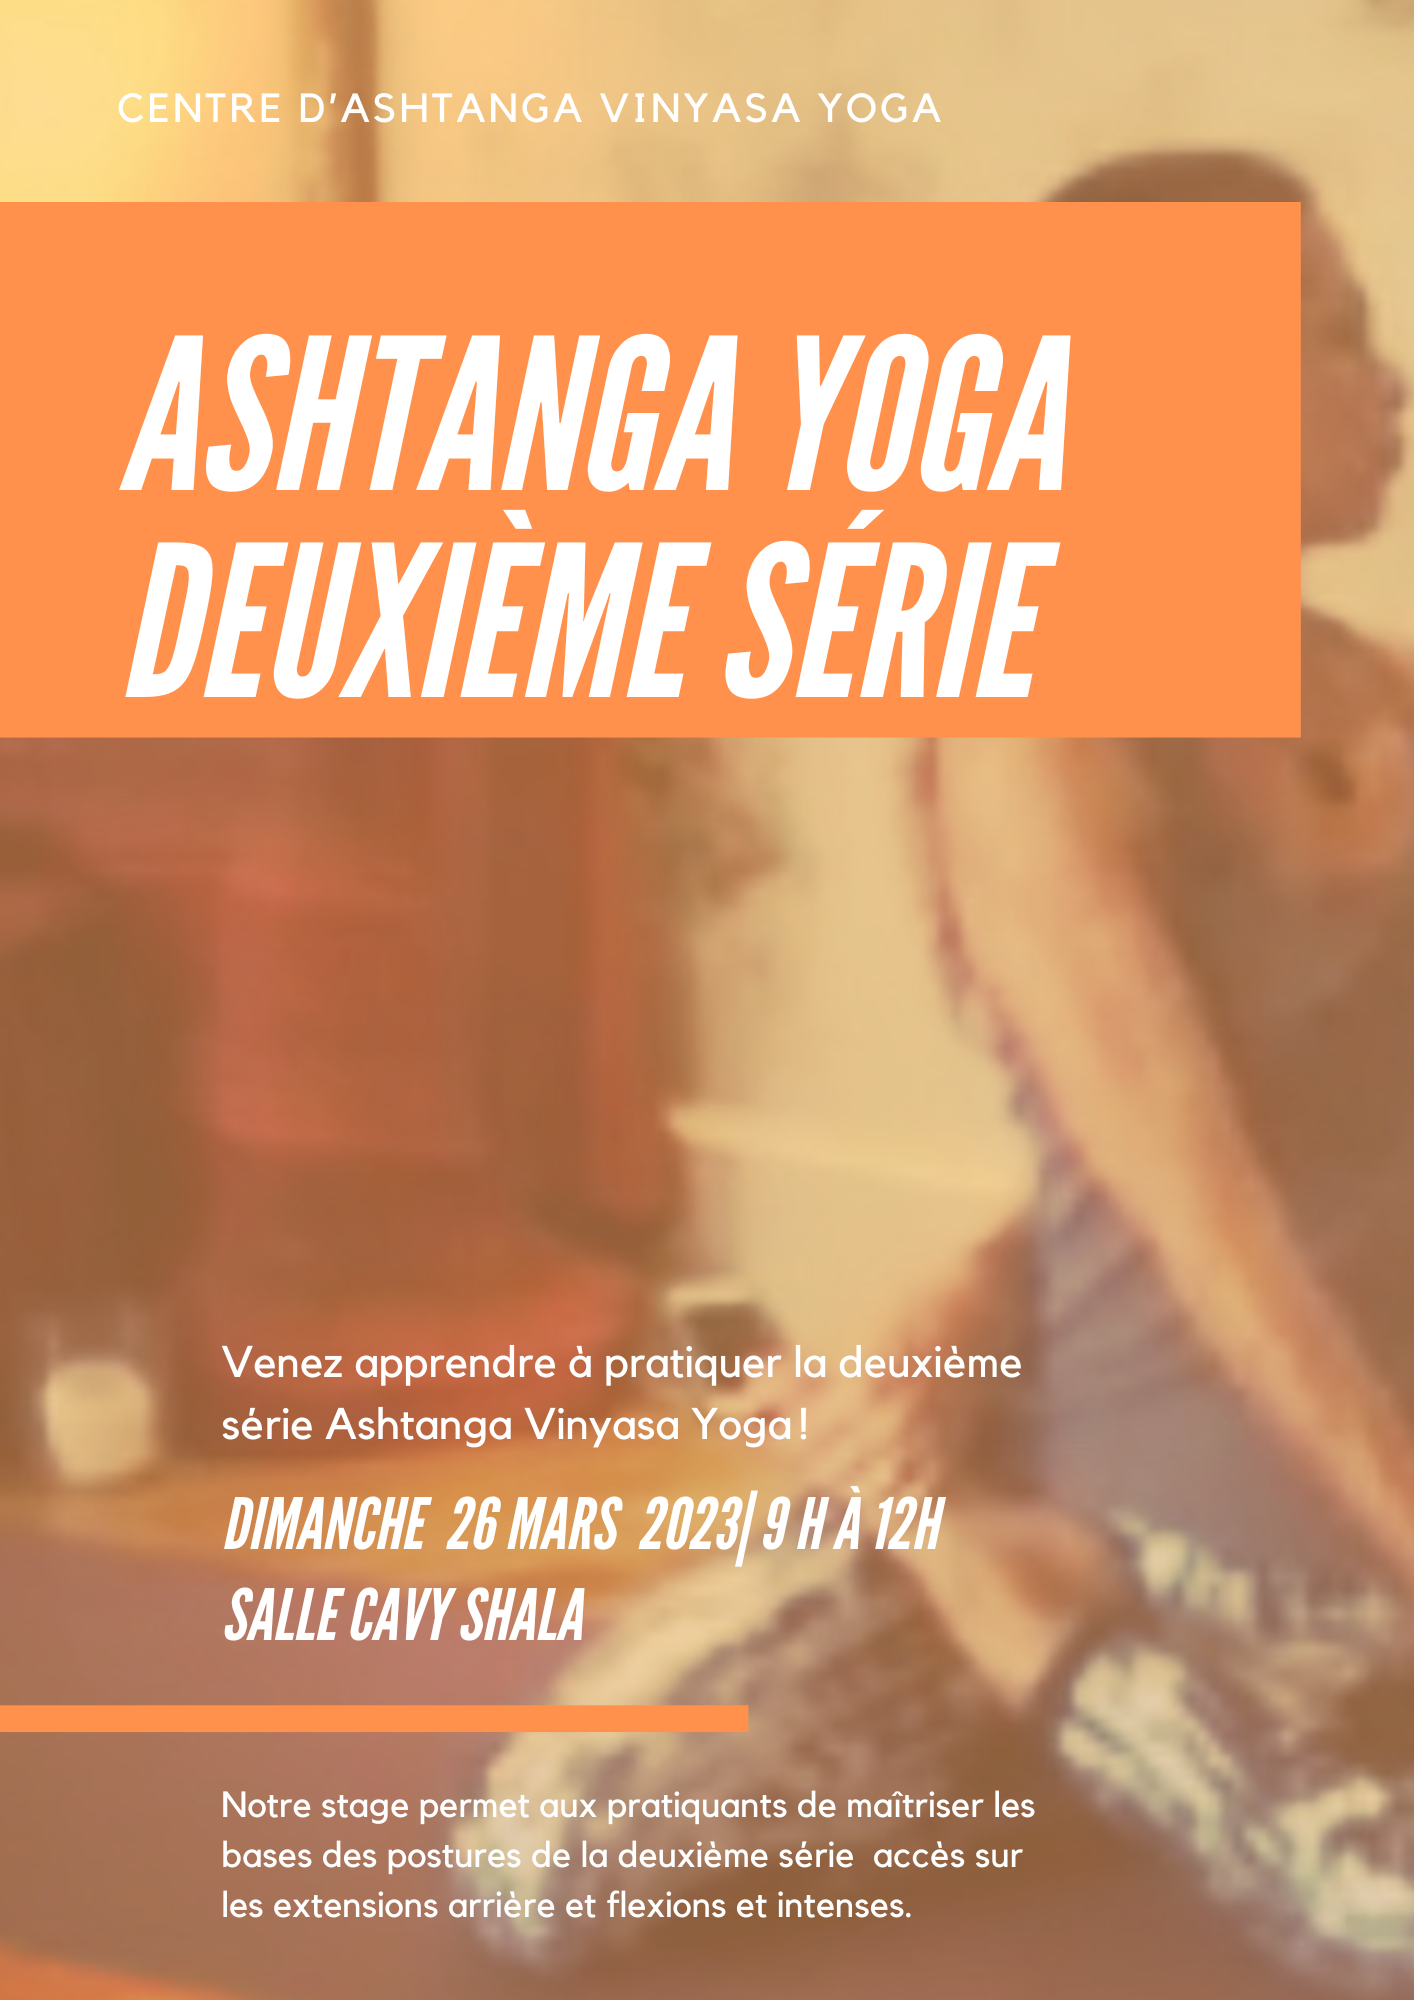 Stage avec le Centre d’Ashtanga Vinyasa Yoga à Narbonne : 25 & 26 mars!